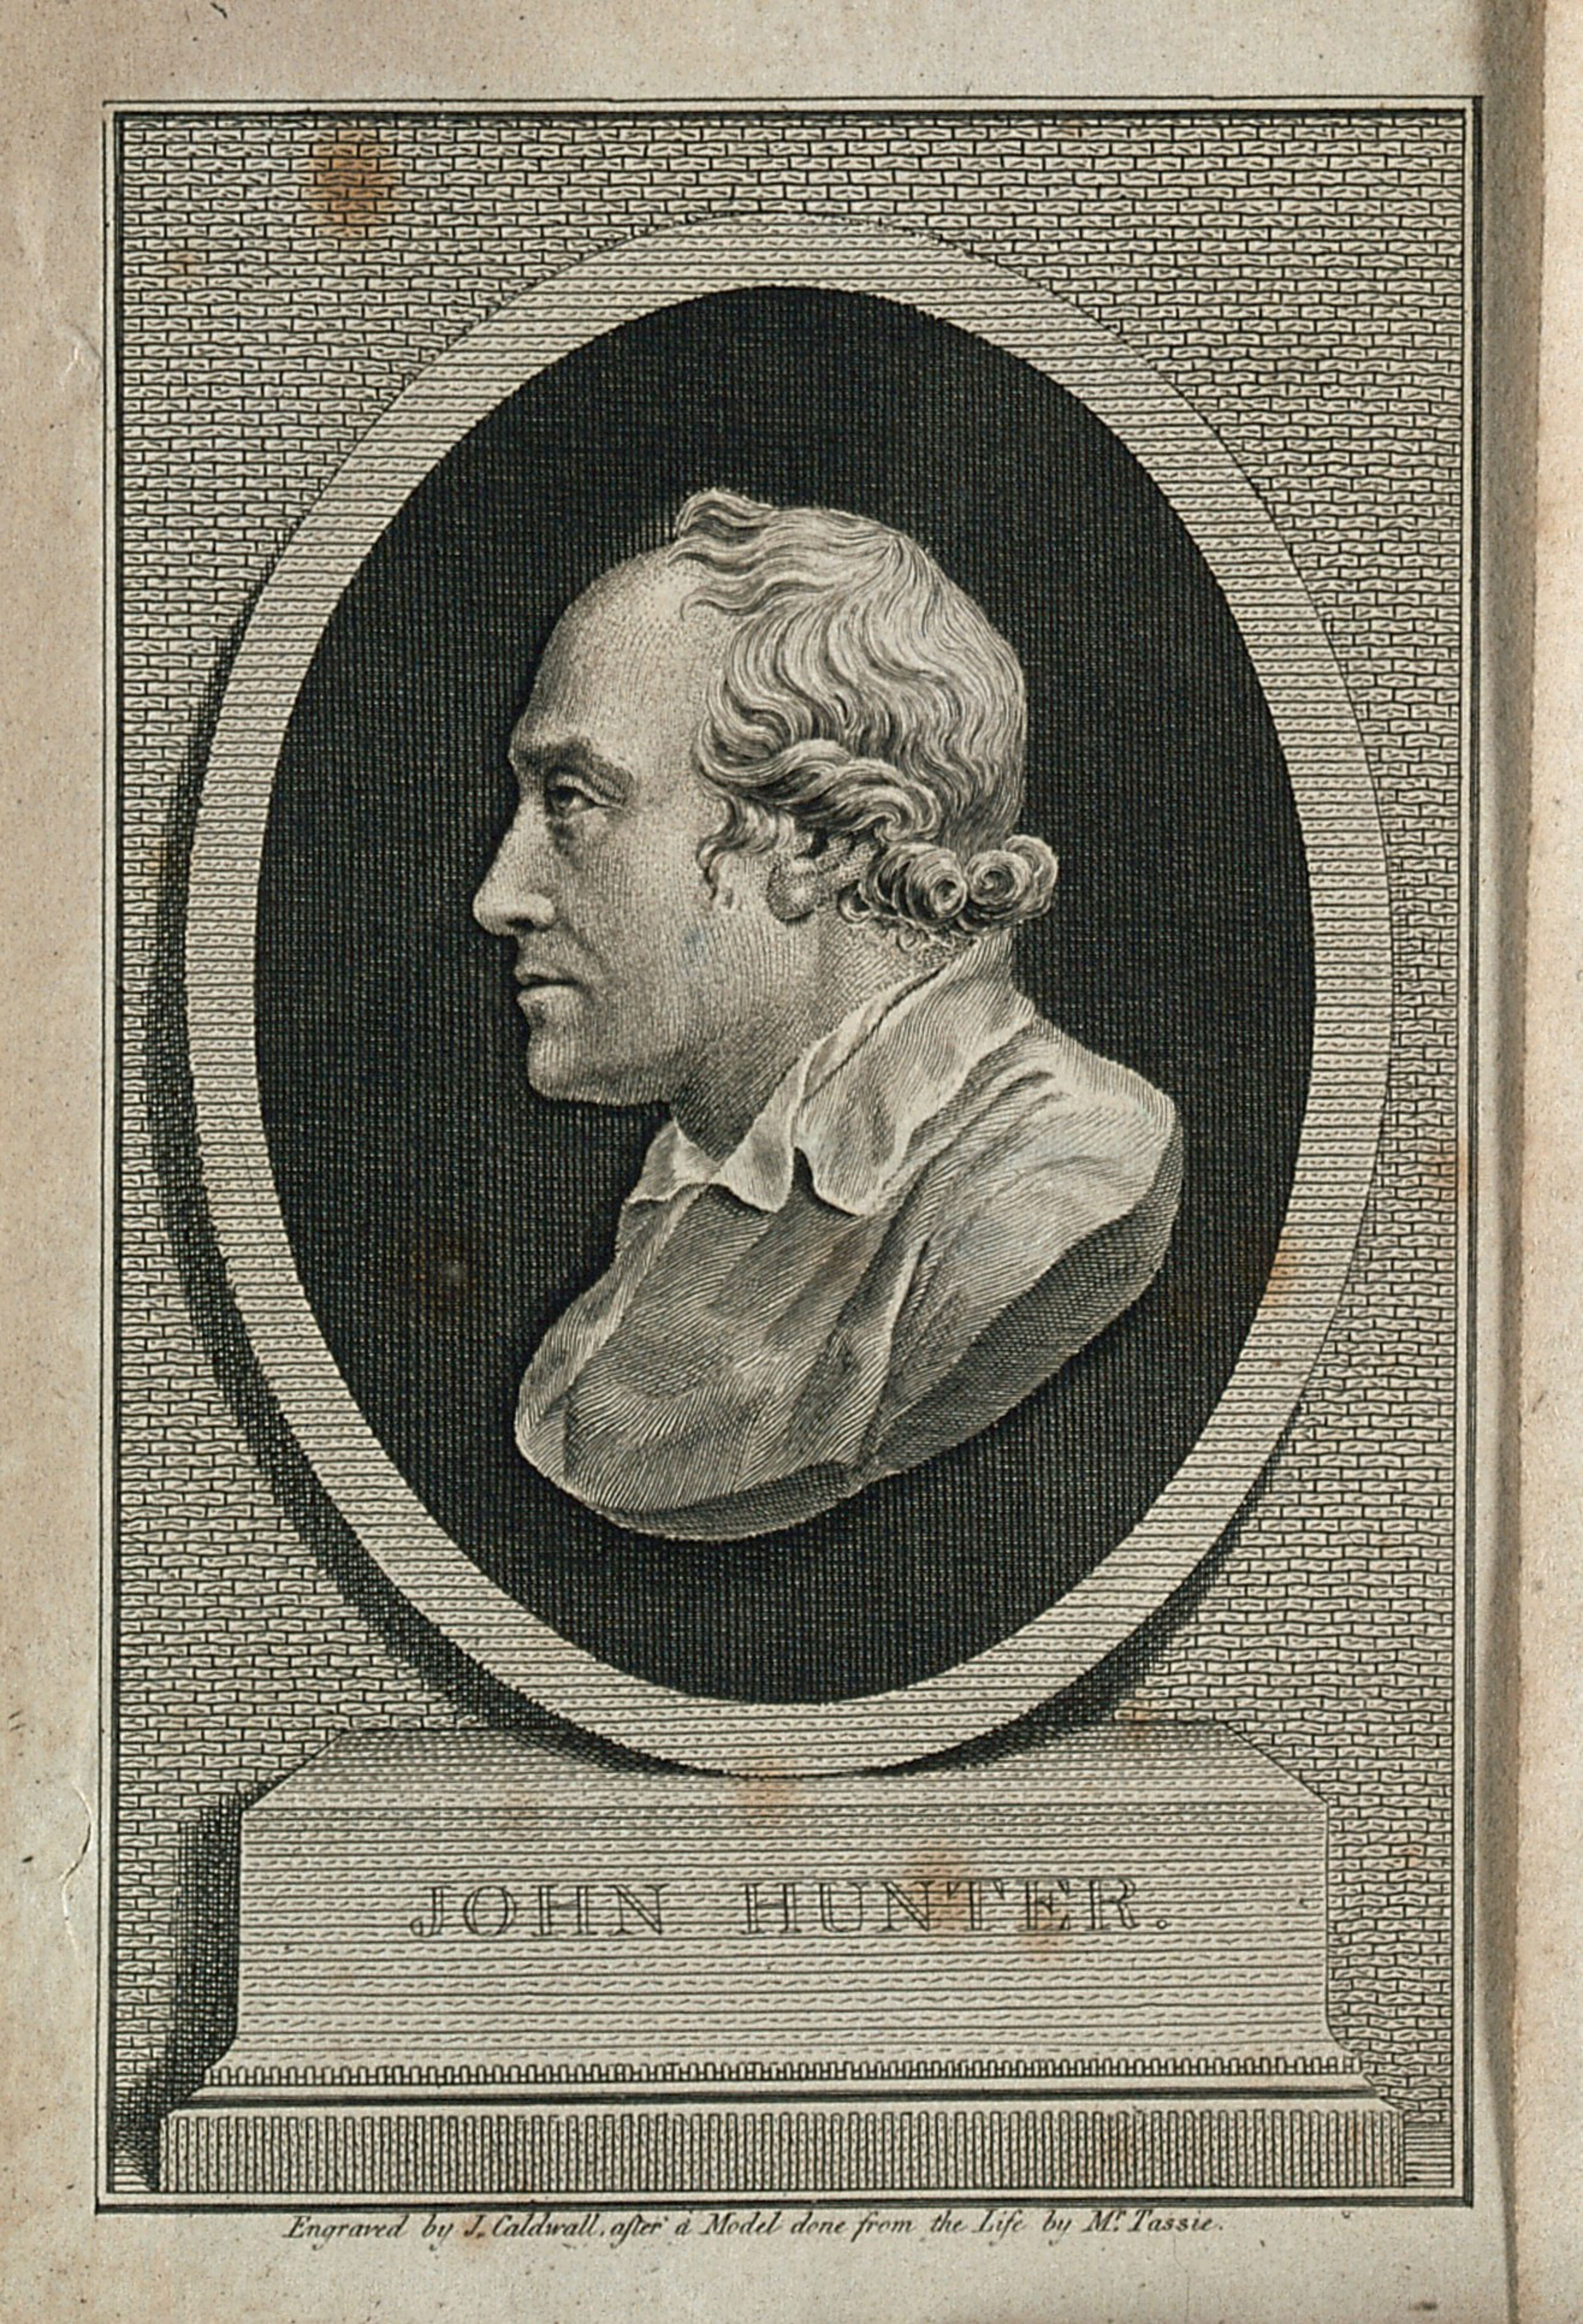 John Hunter. Line engraving by J. Caldwall after J. Tassie, 1791.